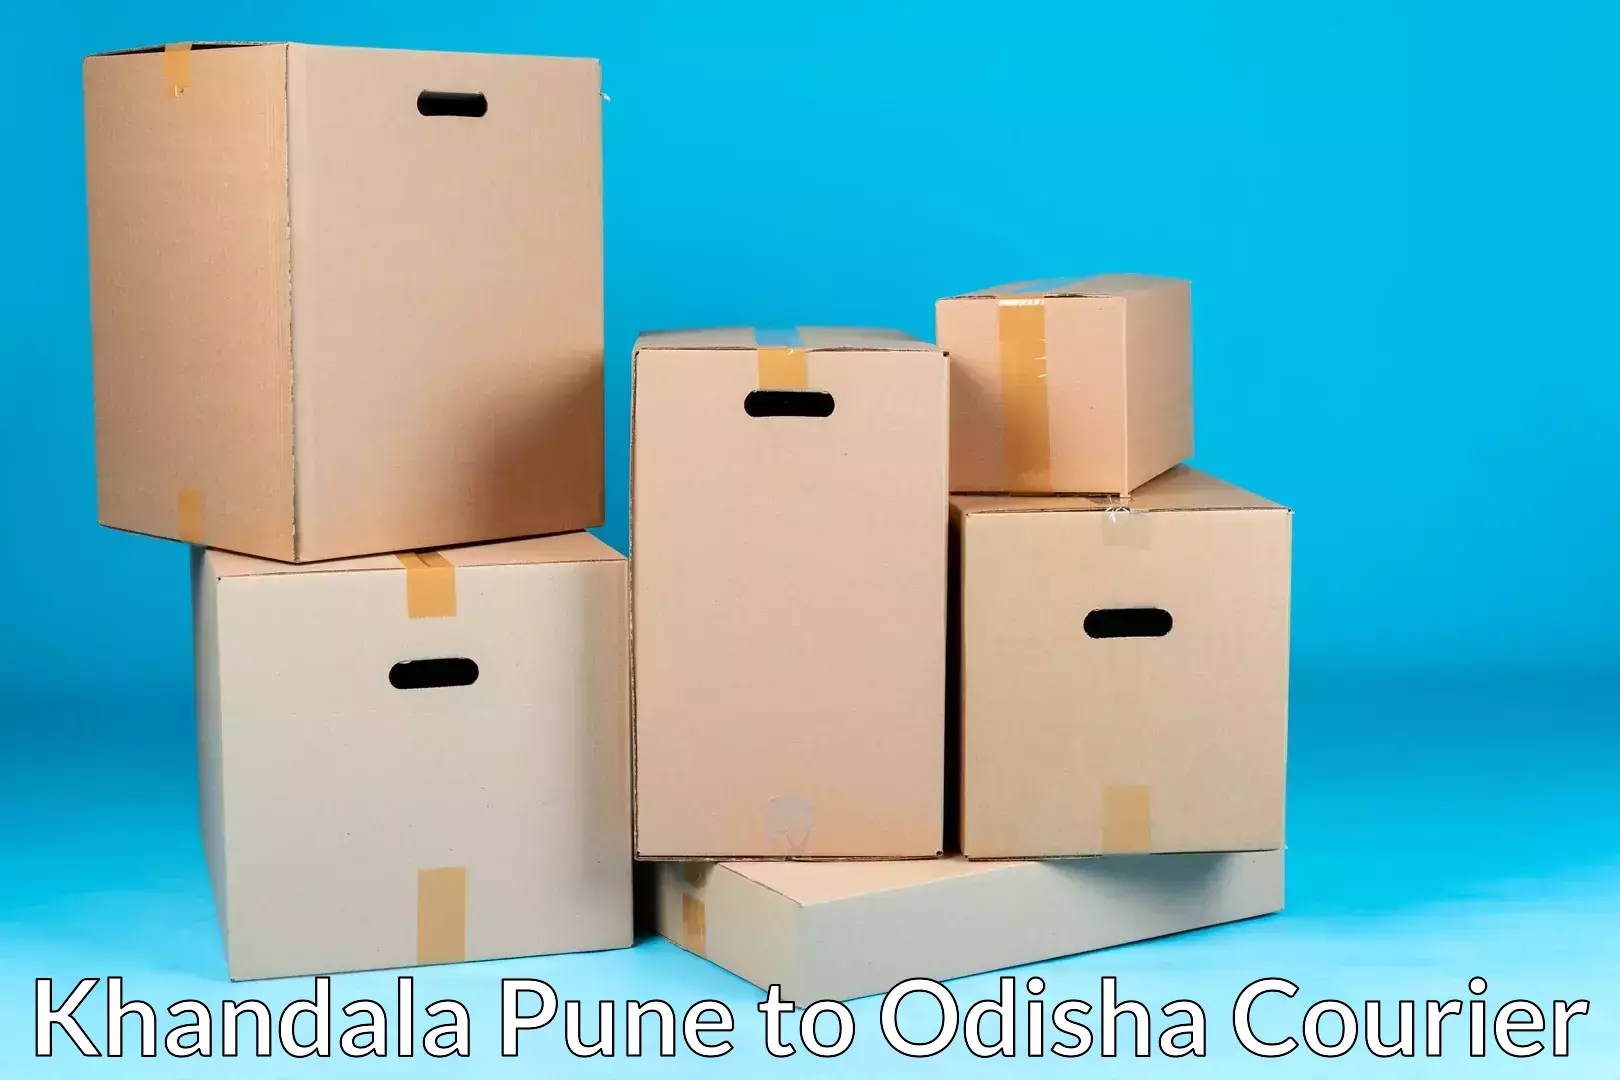 Trusted relocation experts Khandala Pune to Odisha